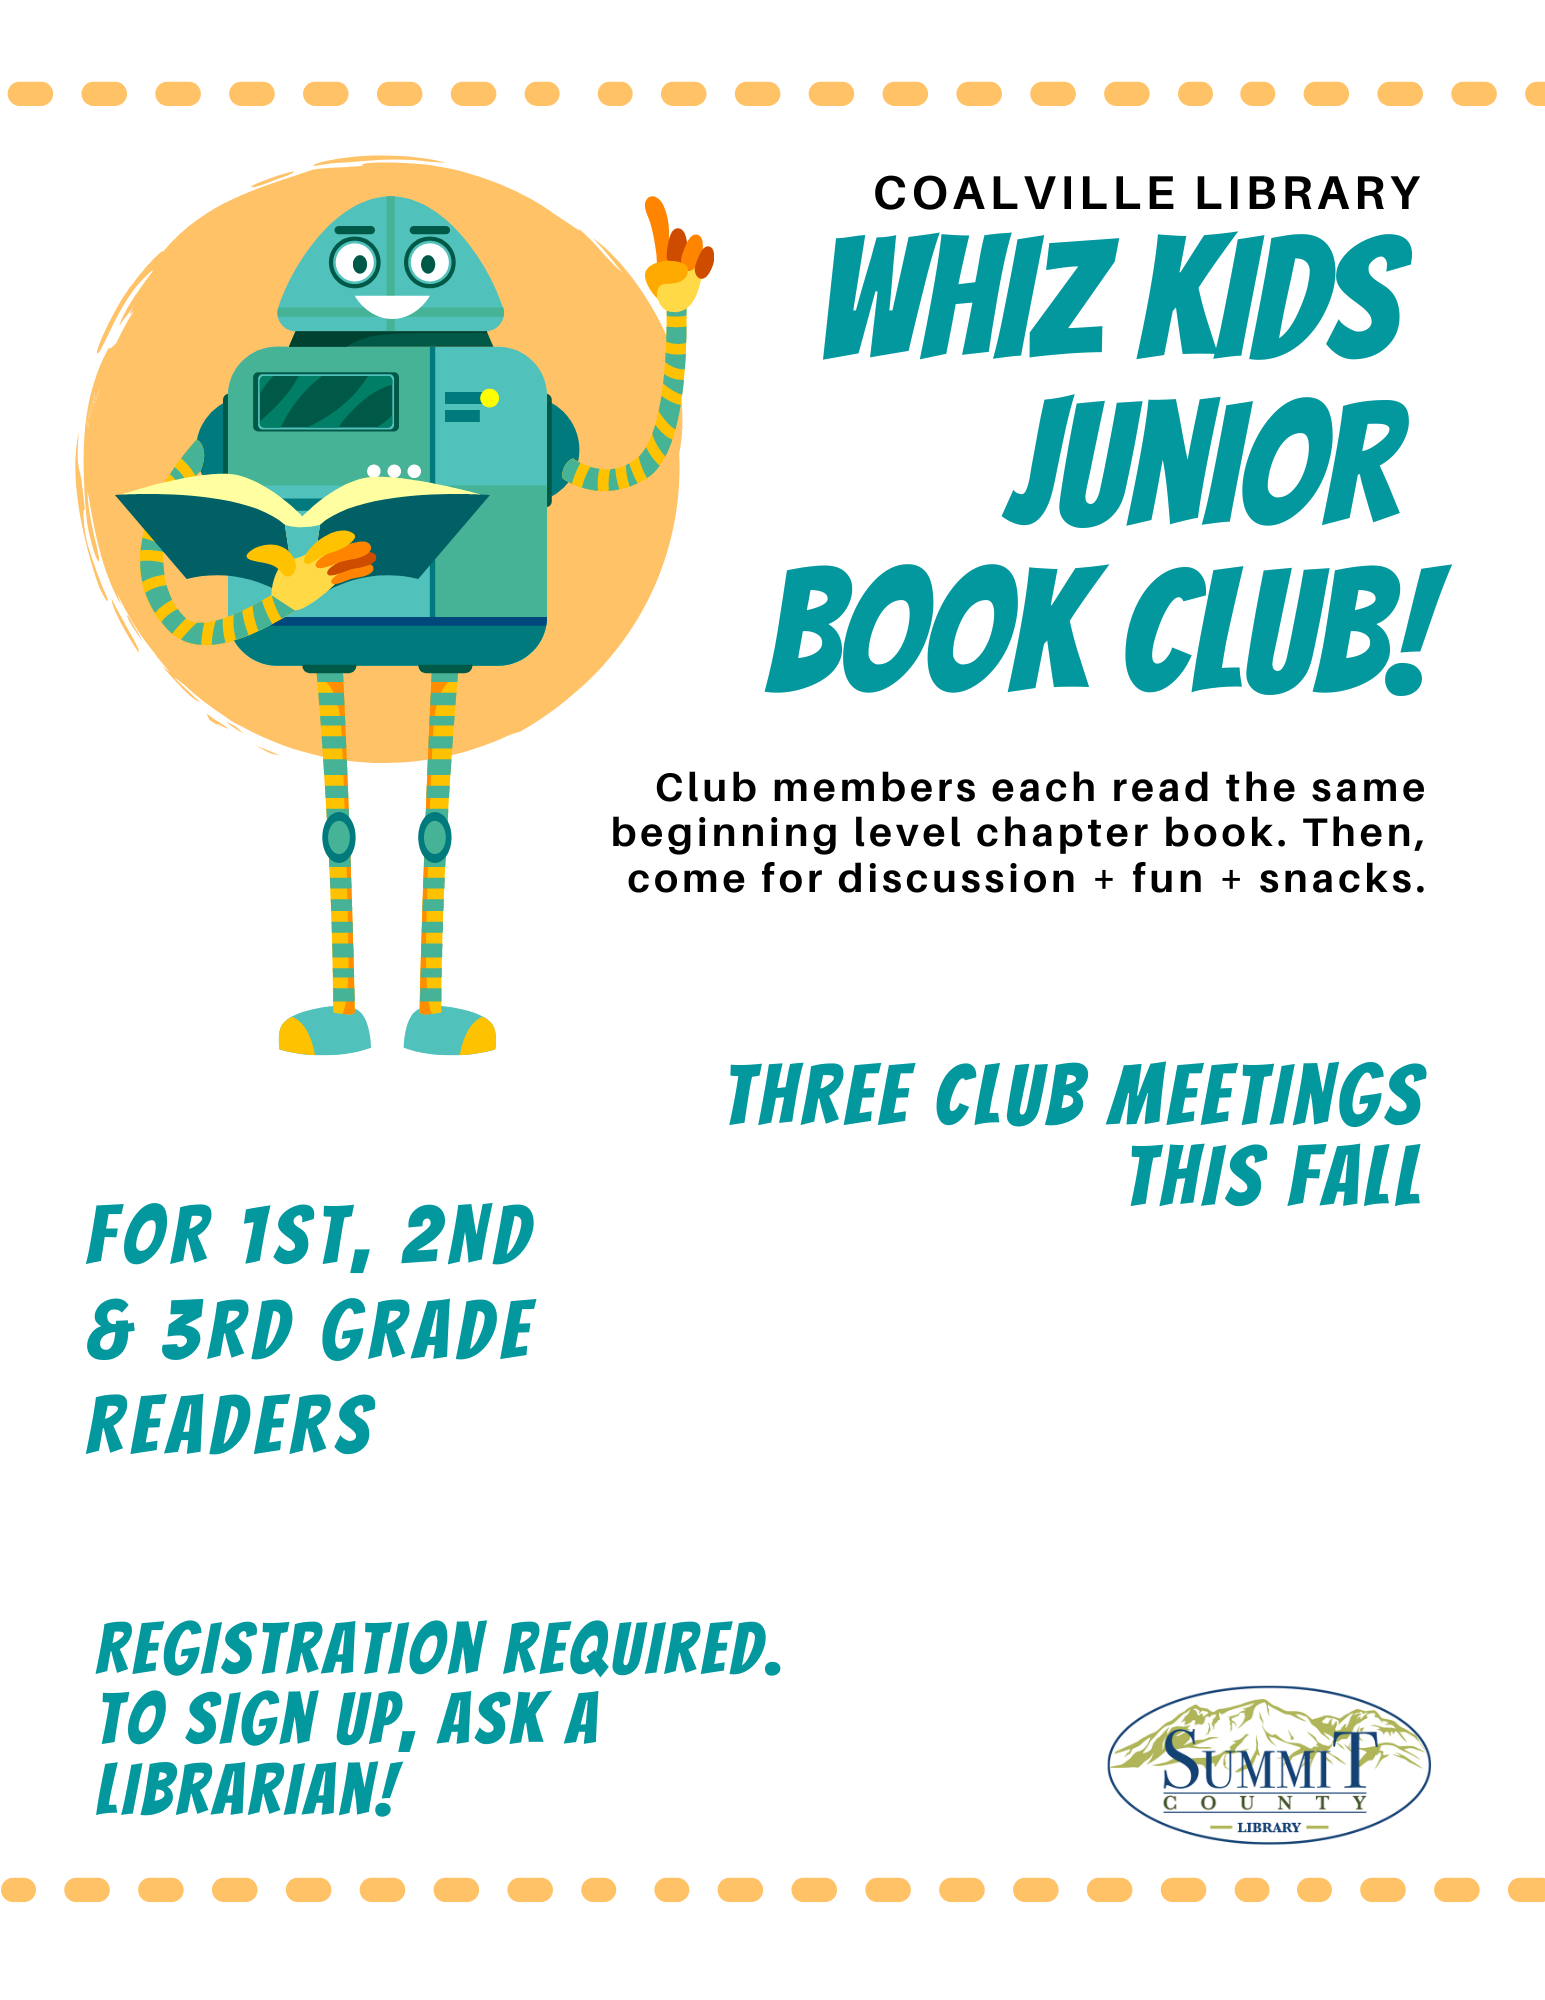 Whiz Kids Junior Book Club at Coalville